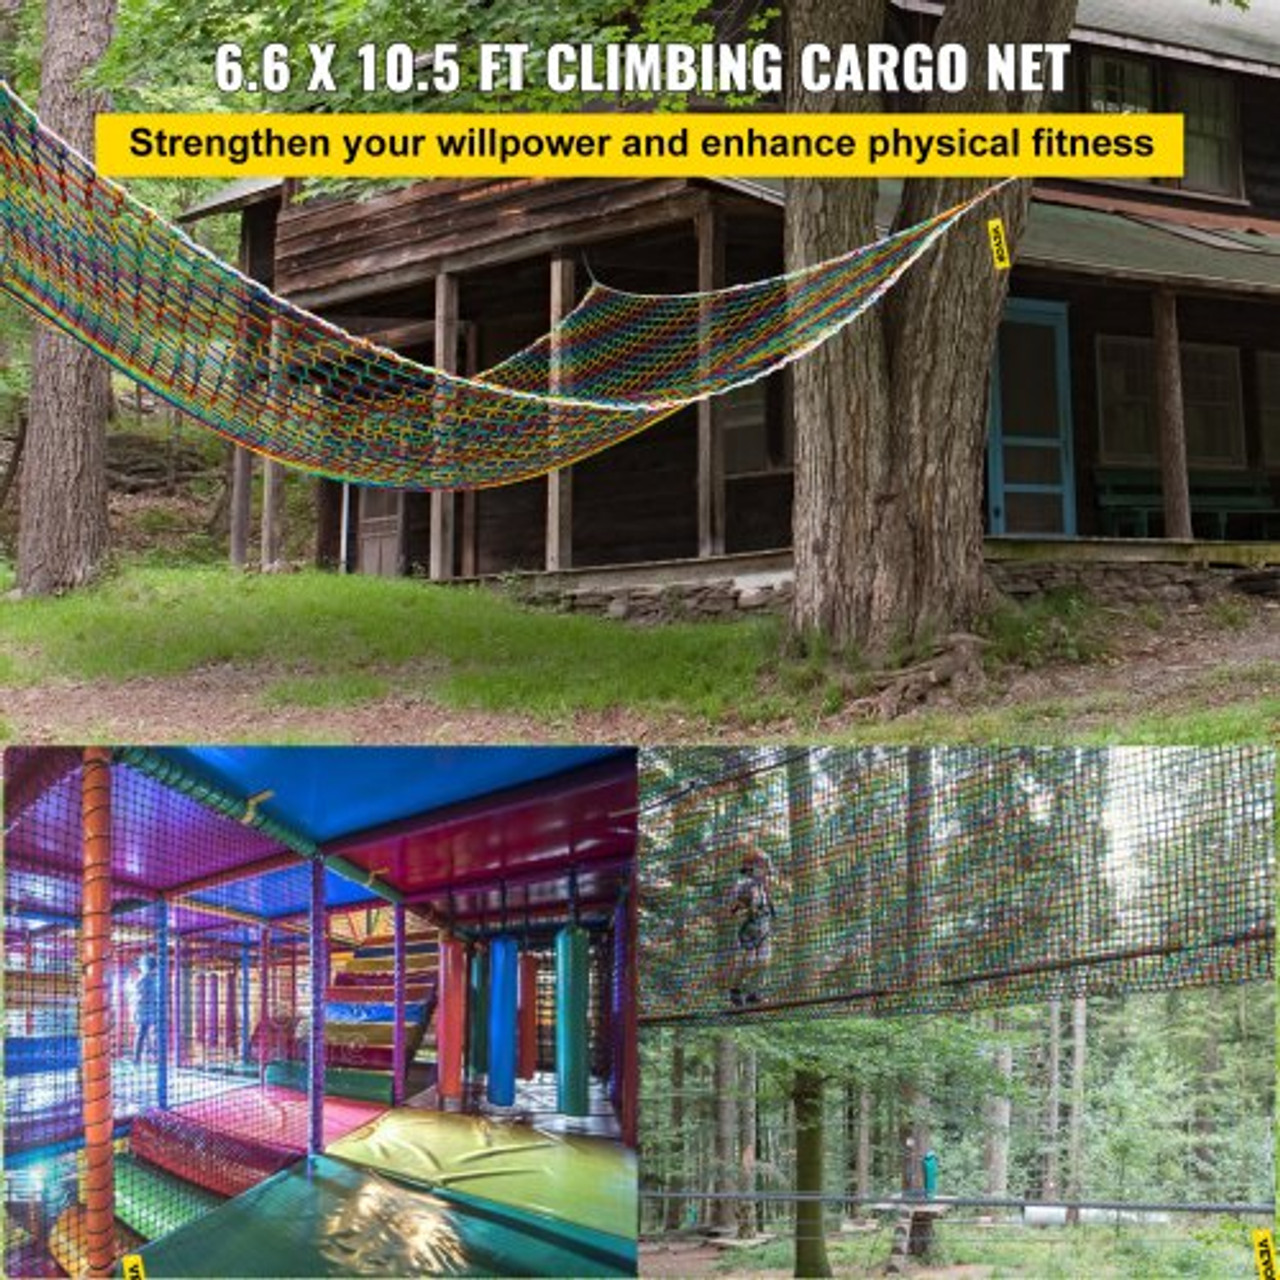 Climbing Cargo Net, 6.6 x 10.5 ft Playground Climbing Cargo Net, Polyester Double Layers Cargo Net Climbing Outdoor w/500lbs Weight Capacity, Rope Bridge Net for Tree House, Monkey Bar, Rainbow